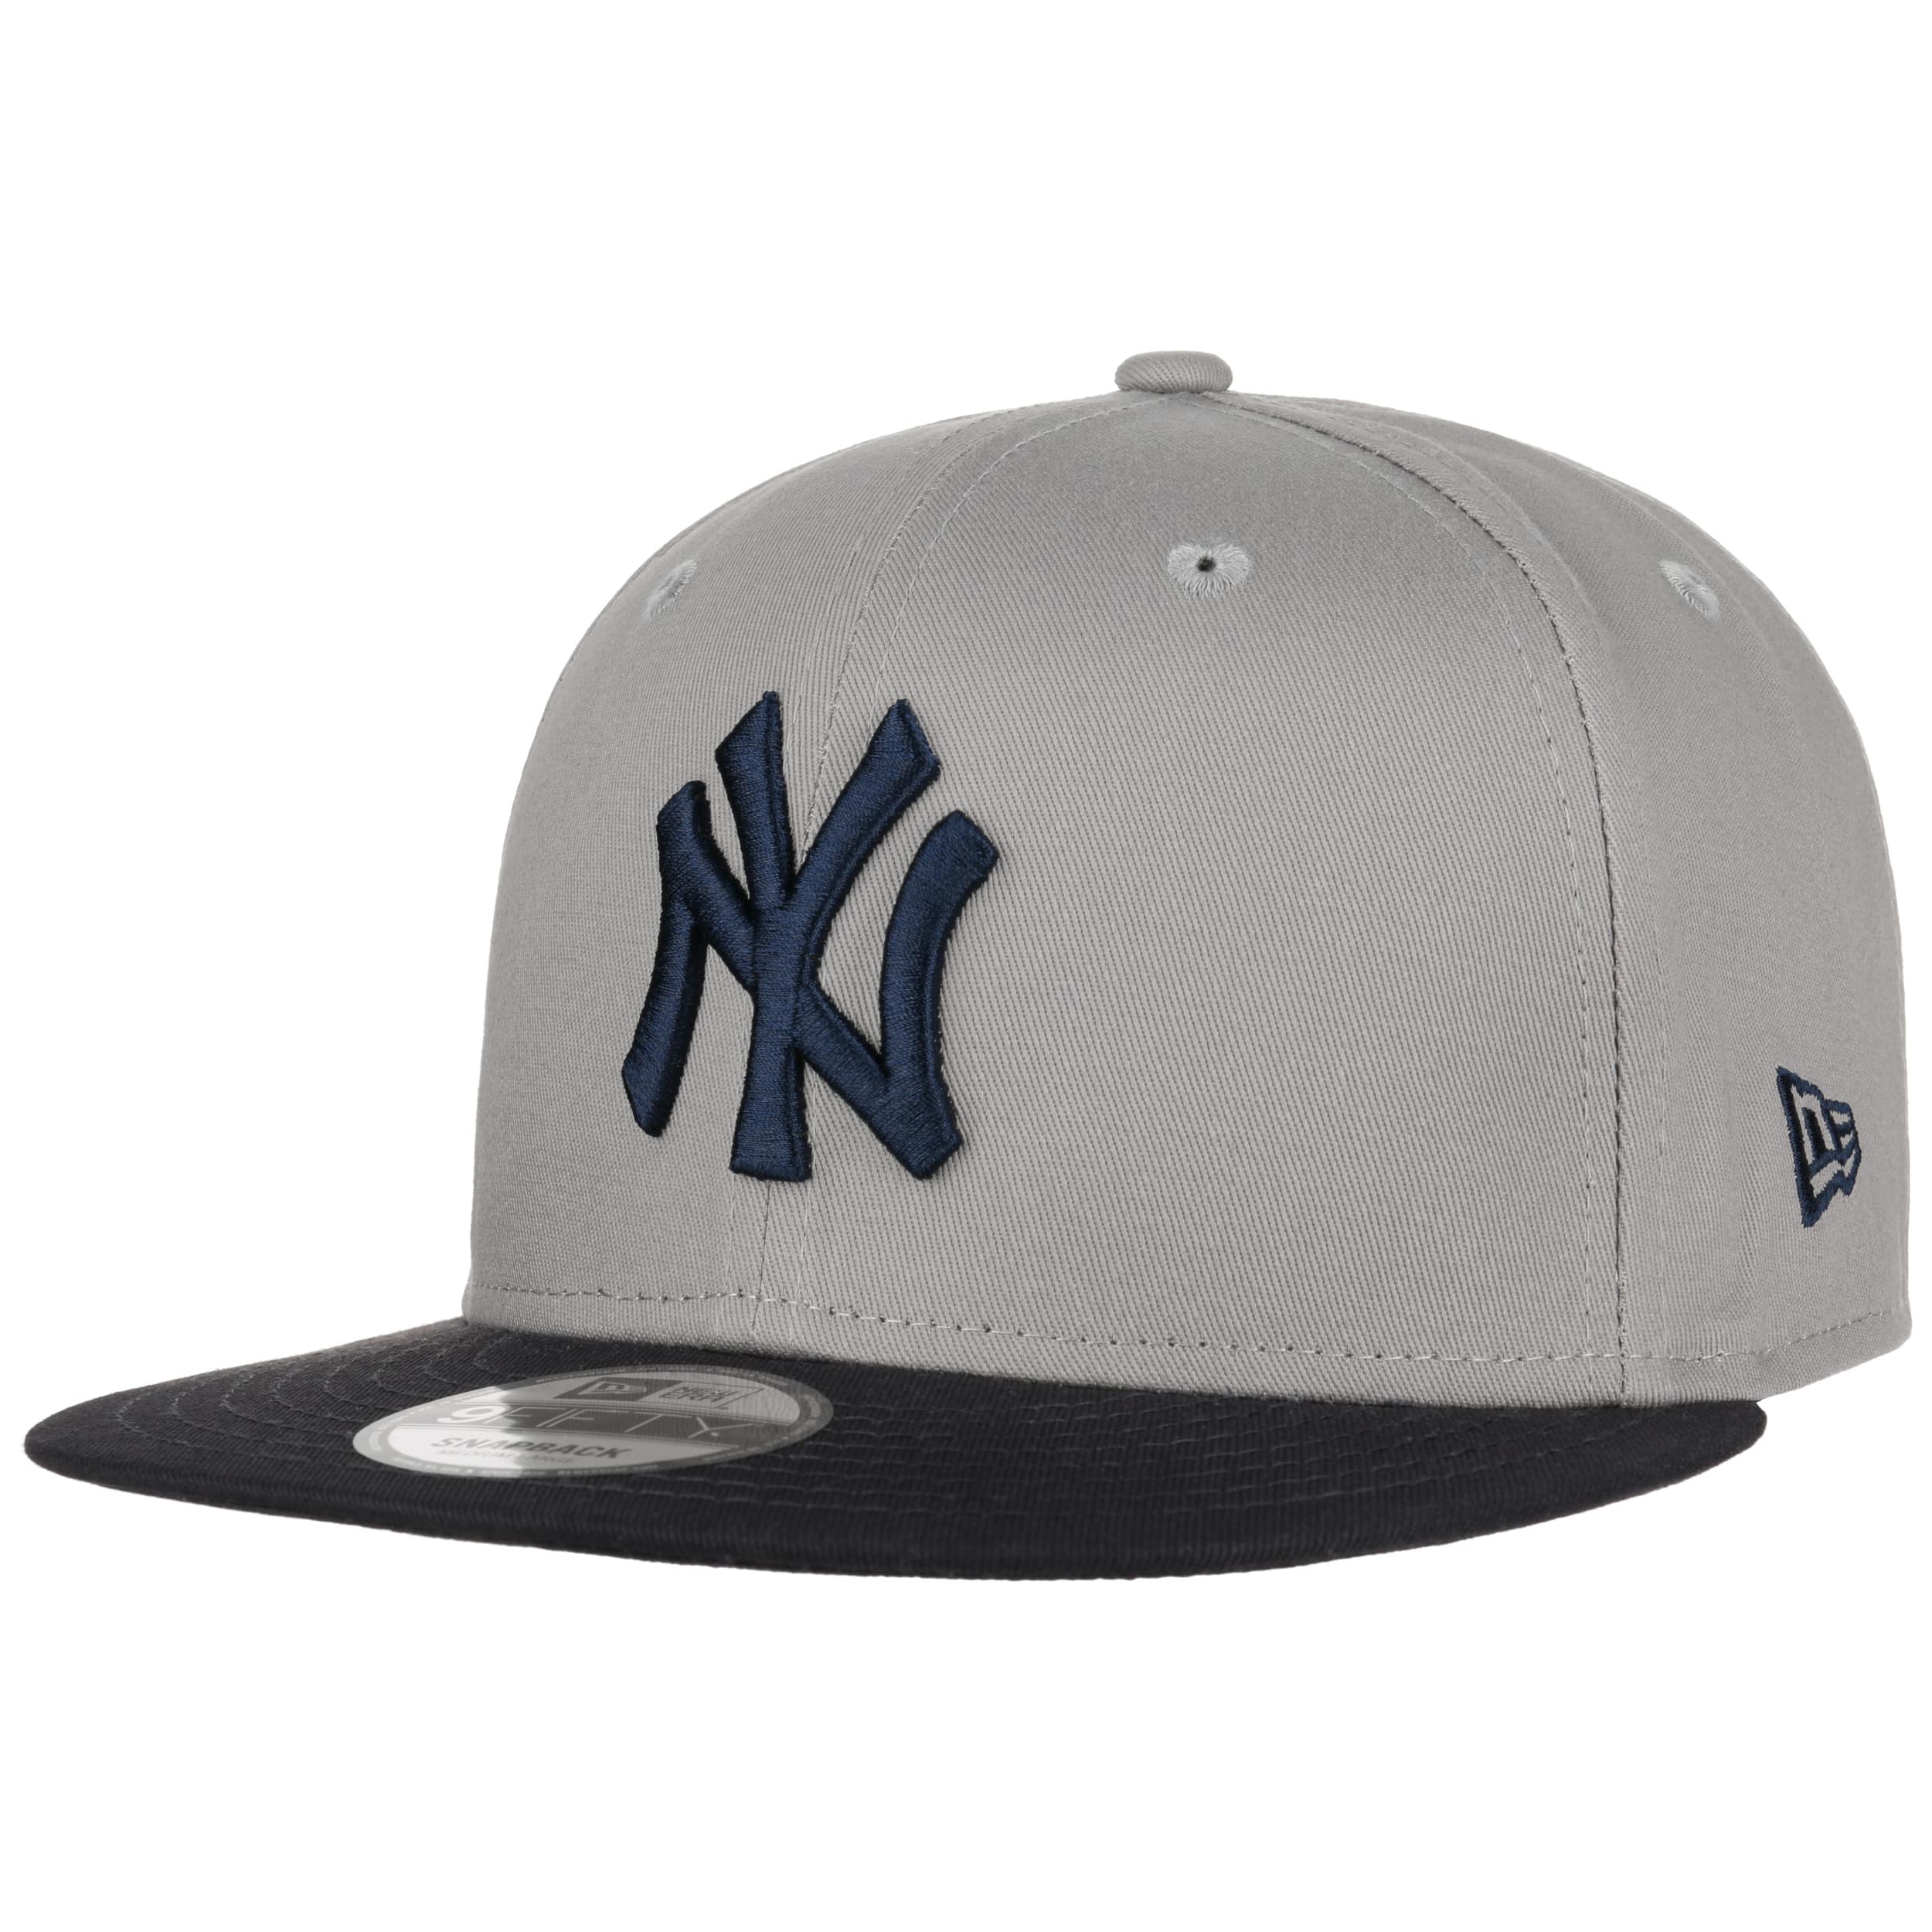 New Era 9FIFTY MLB Basic Logo Snapback Hat Black